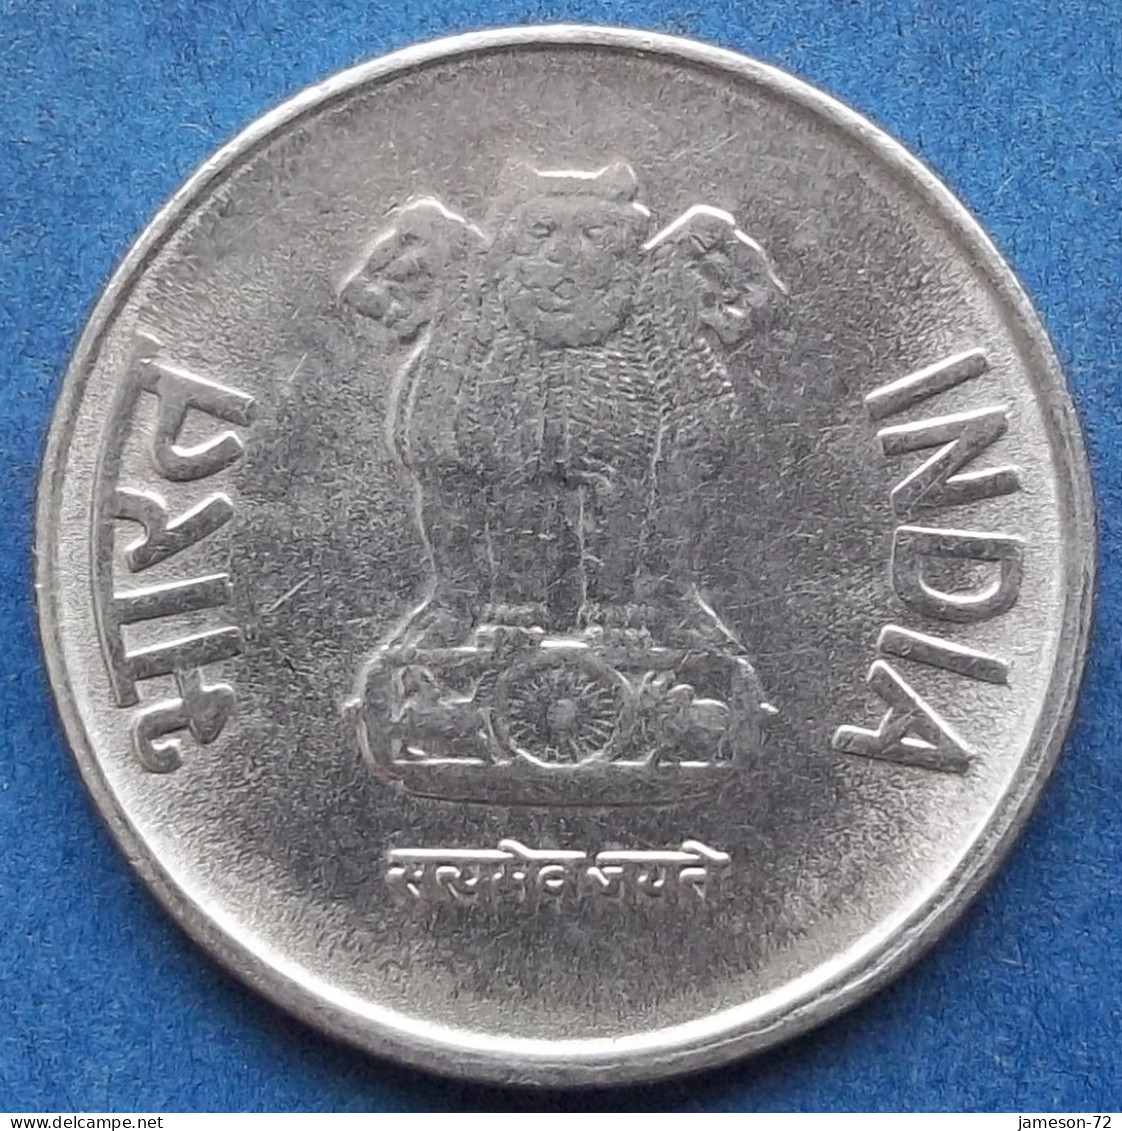 INDIA - 1 Rupee 2014 "Lotus Flowers" KM# 394 Republic Decimal Coinage (1957) - Edelweiss Coins - Georgië